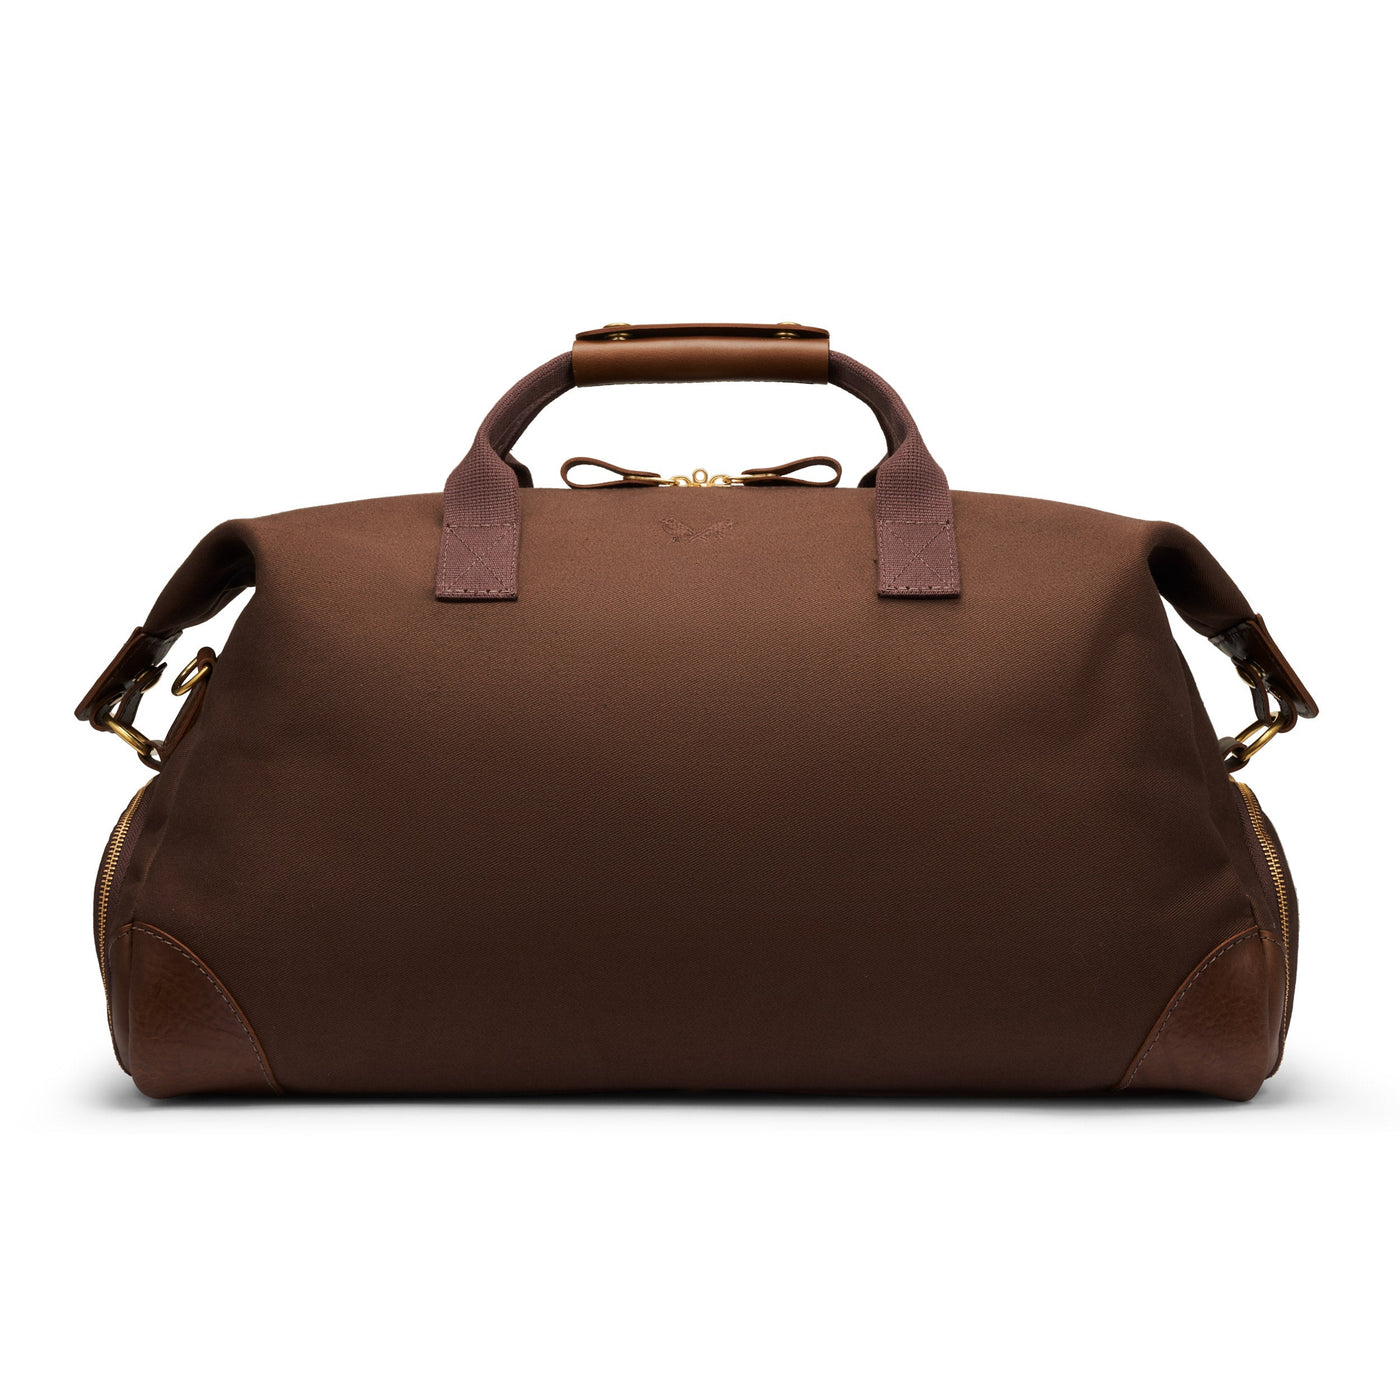 Bennett Winch Weekender-Luggage-Chocolate-Kevin's Fine Outdoor Gear & Apparel